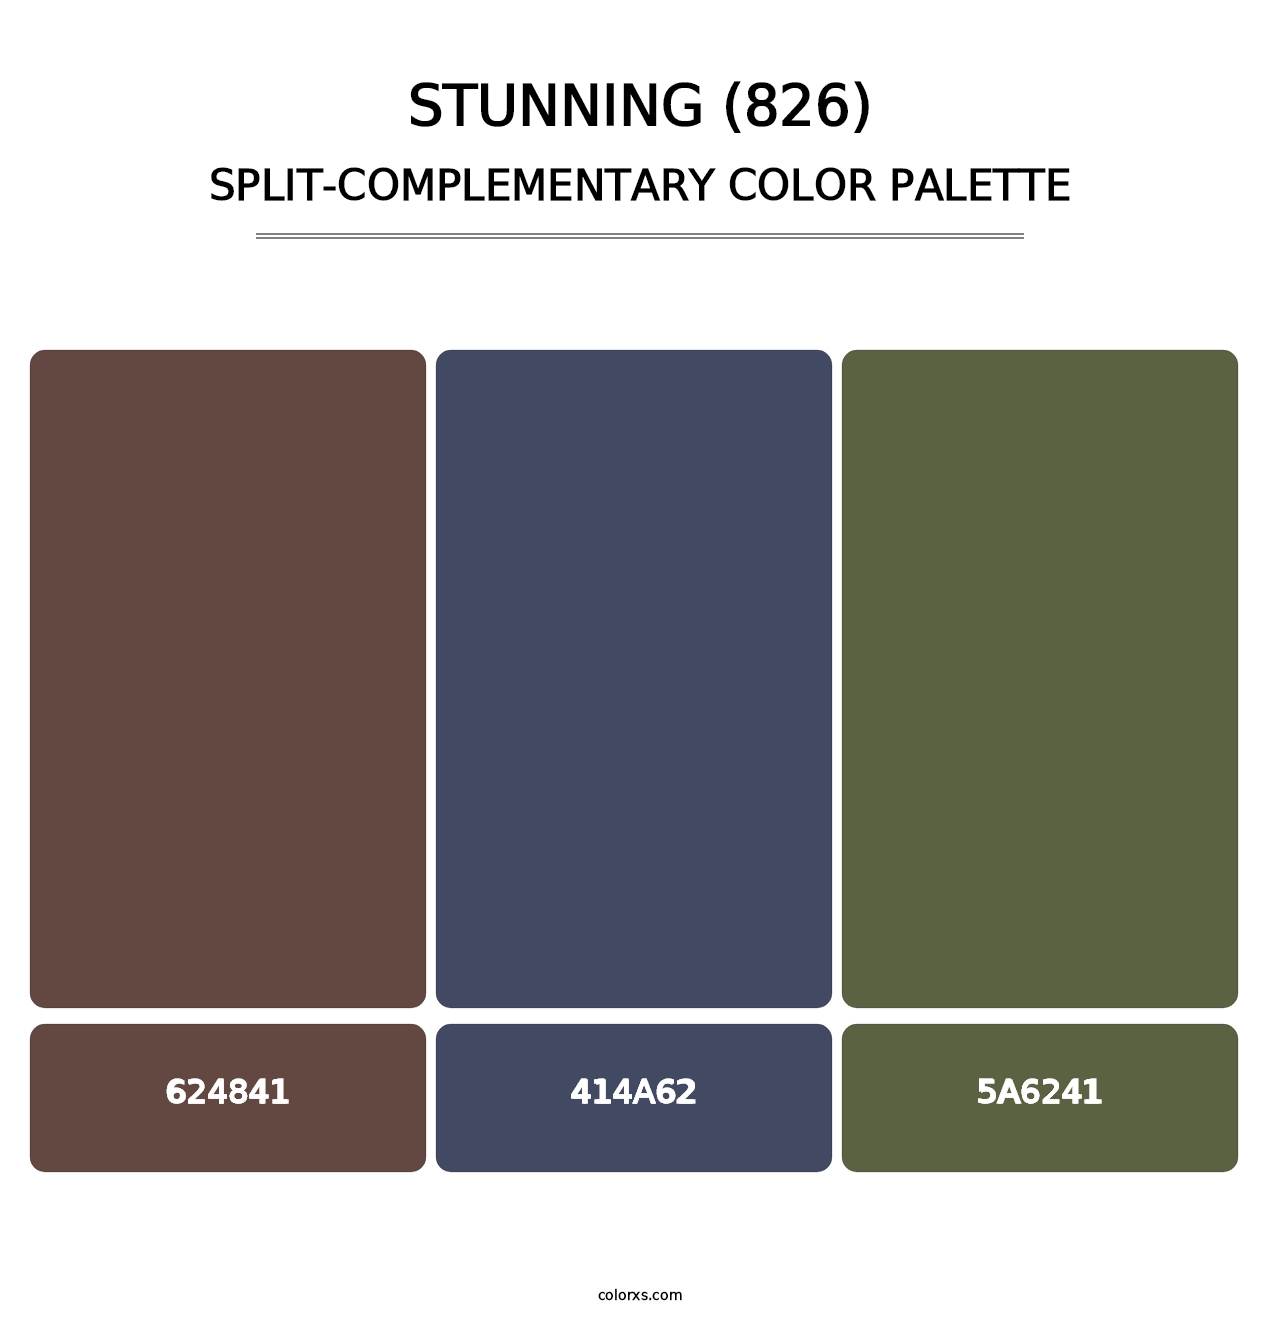 Stunning (826) - Split-Complementary Color Palette